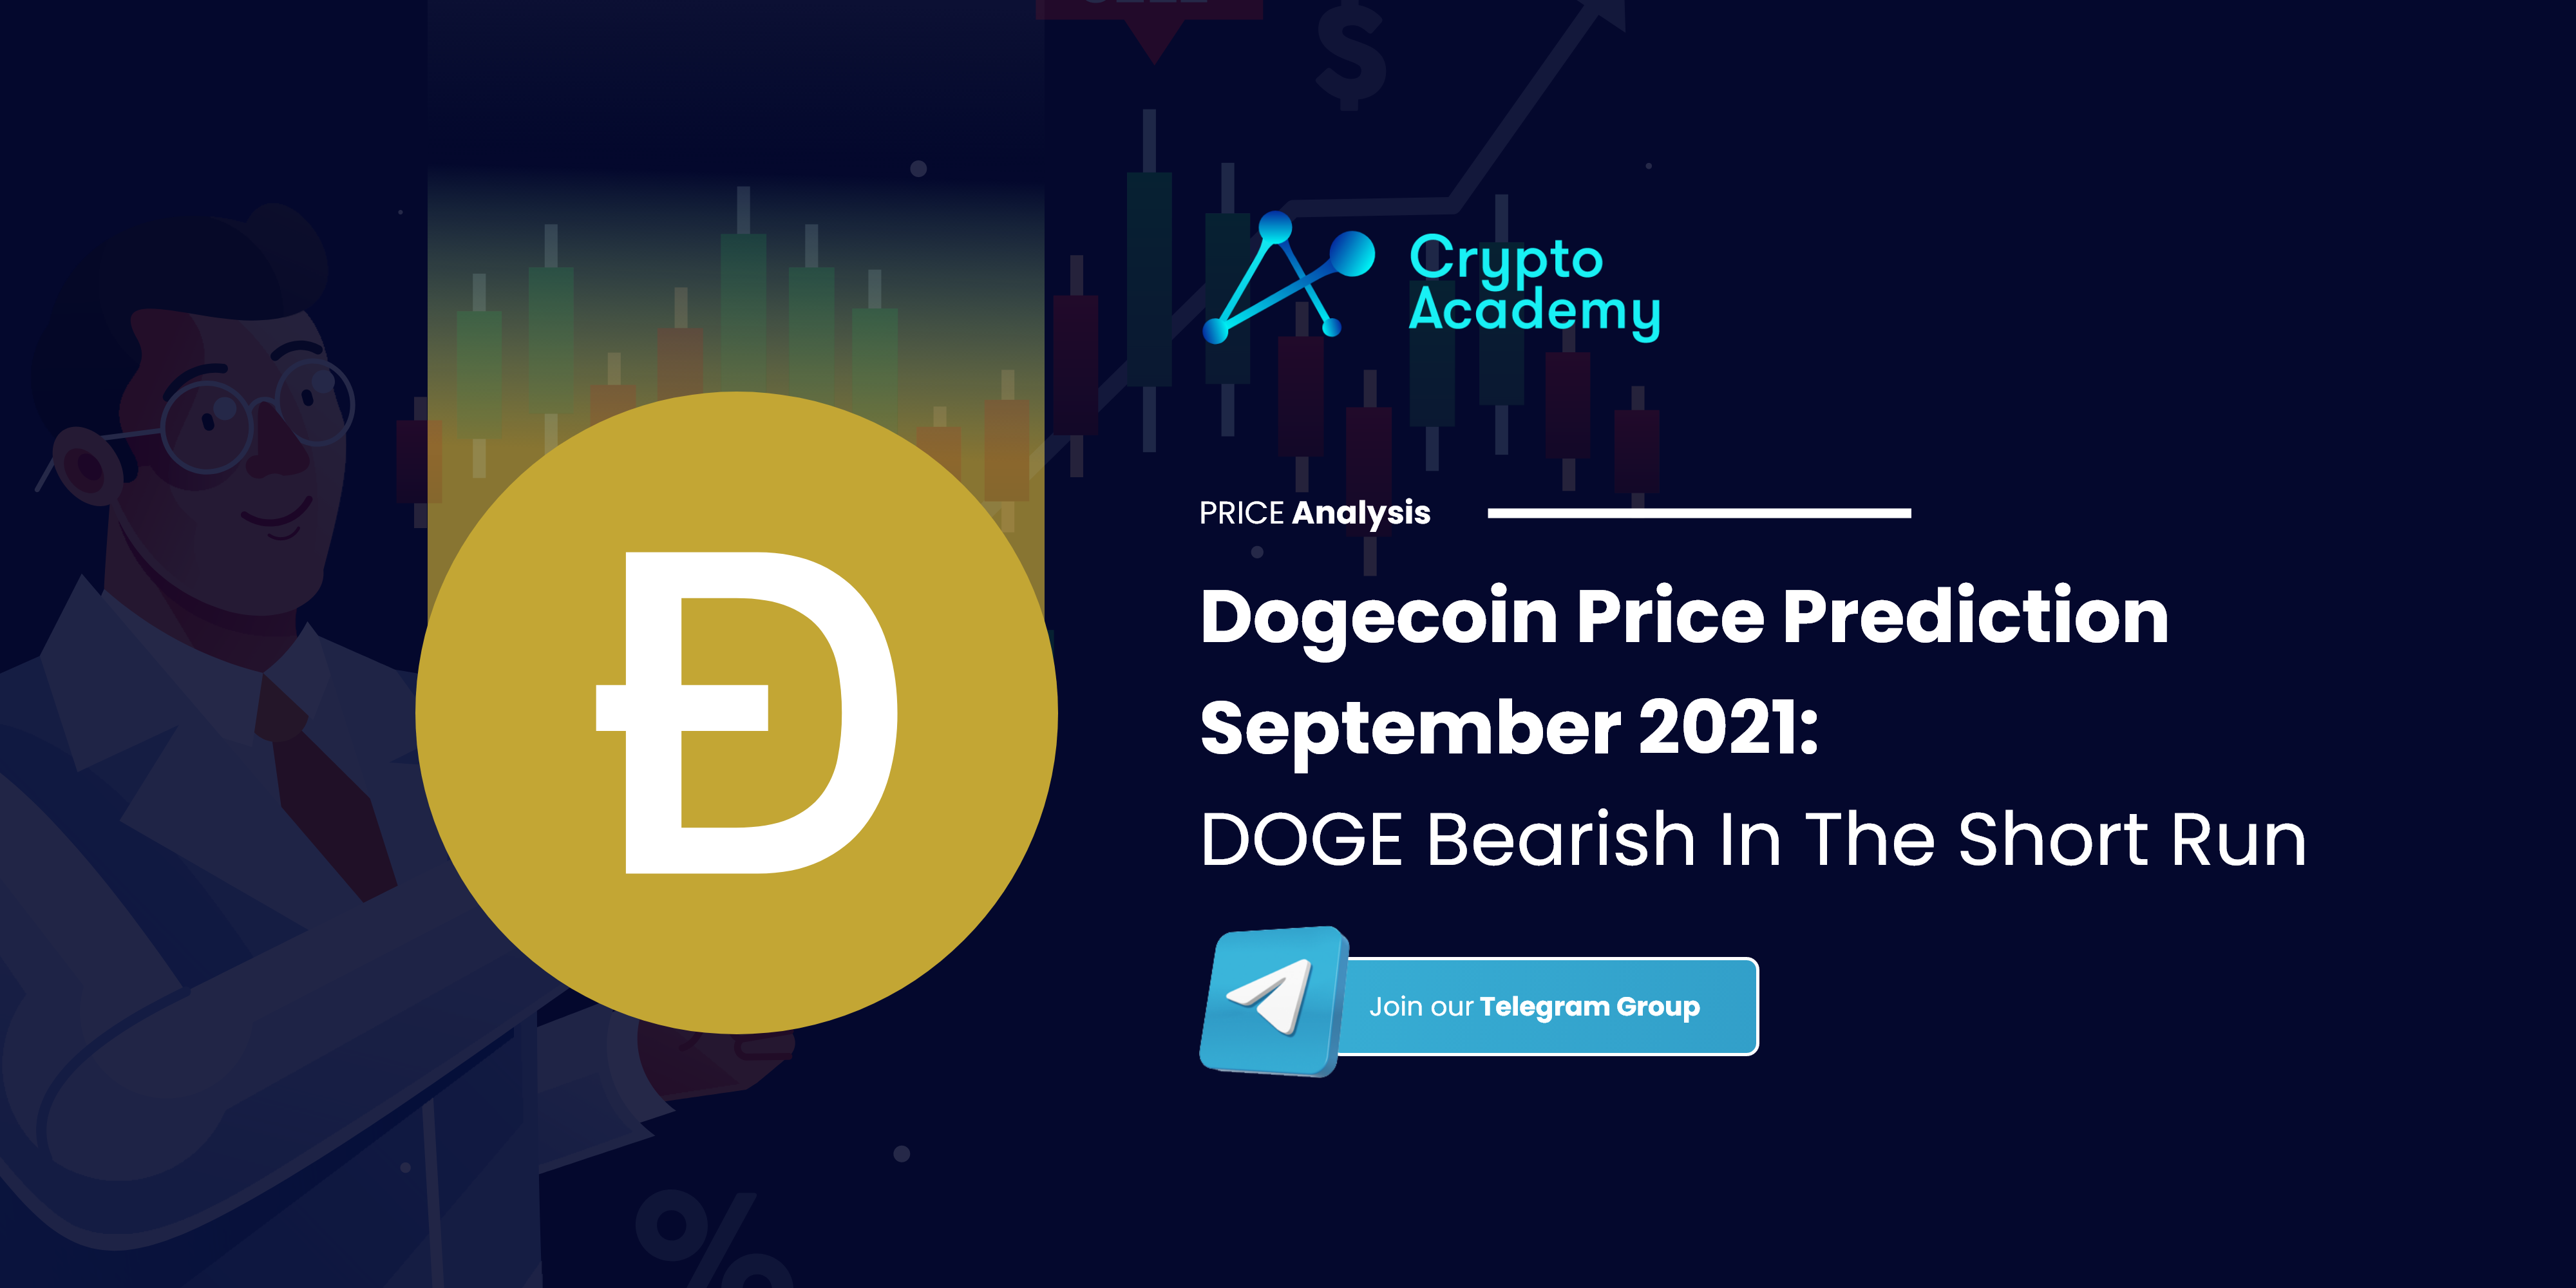 Dogecoin Price Prediction September 2021: DOGE Bearish In The Short Run